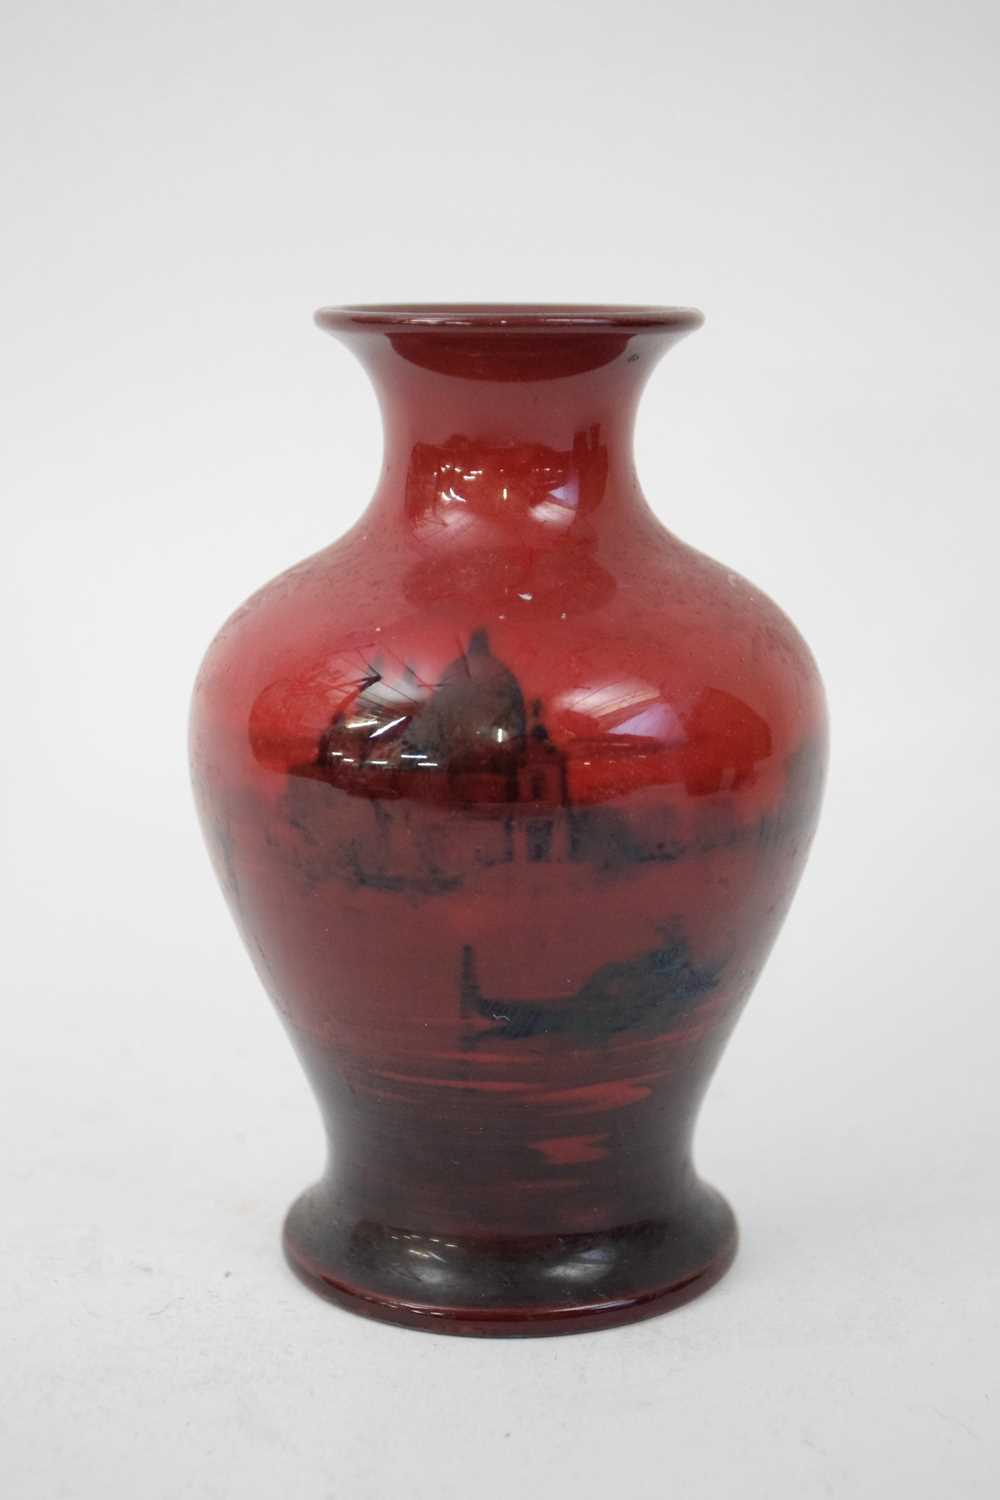 Doulton flambe vase with a Venetian scene